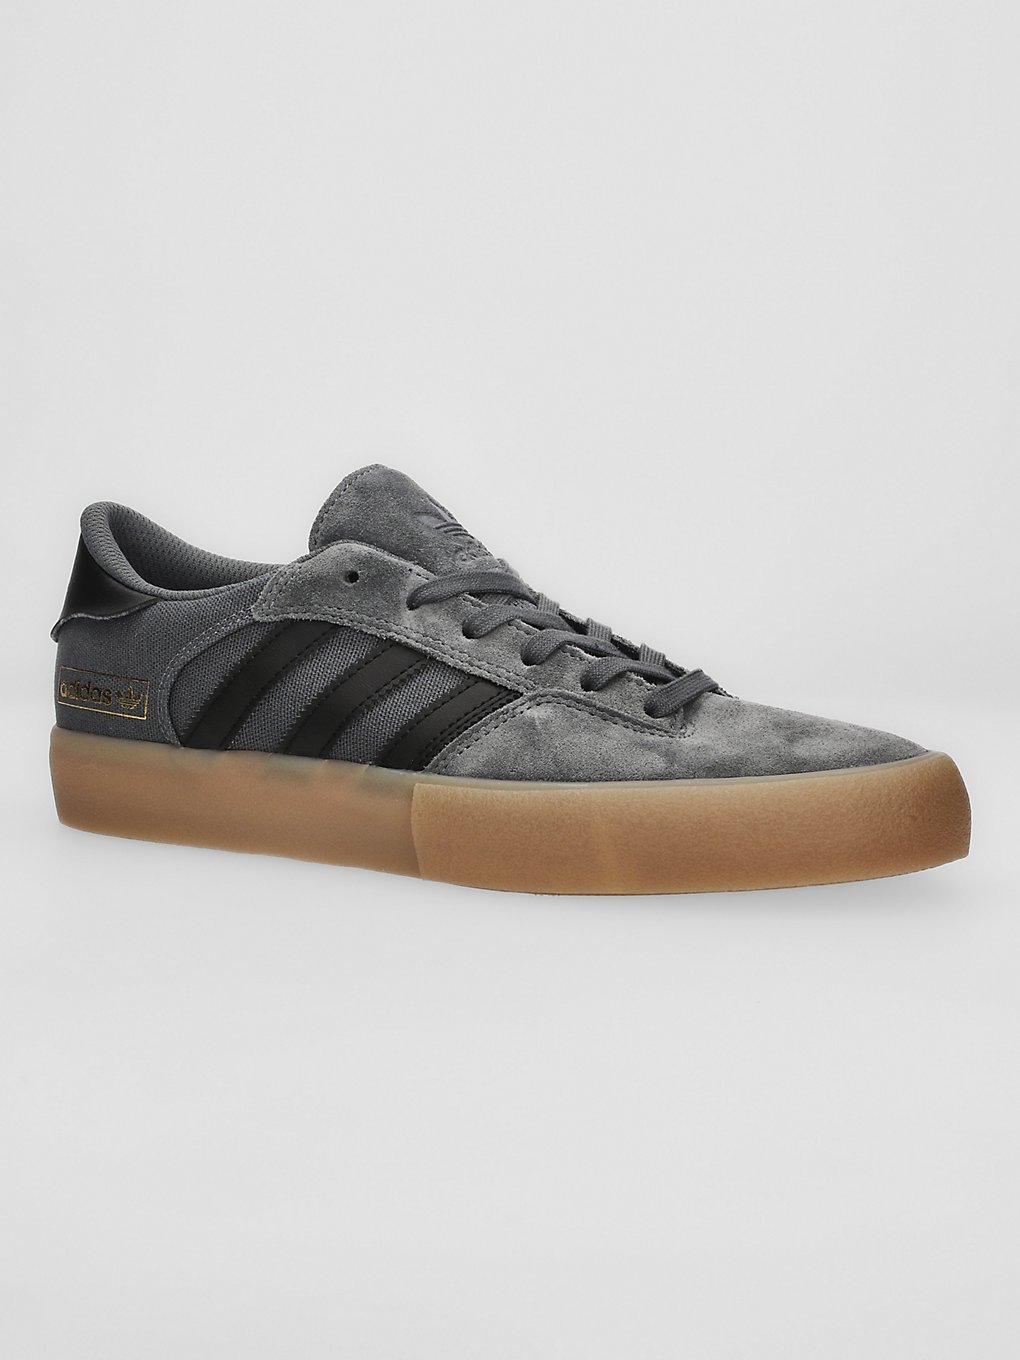 Adidas Skateboarding Matchbreak Super Skate Shoes grey five/core black/gum4